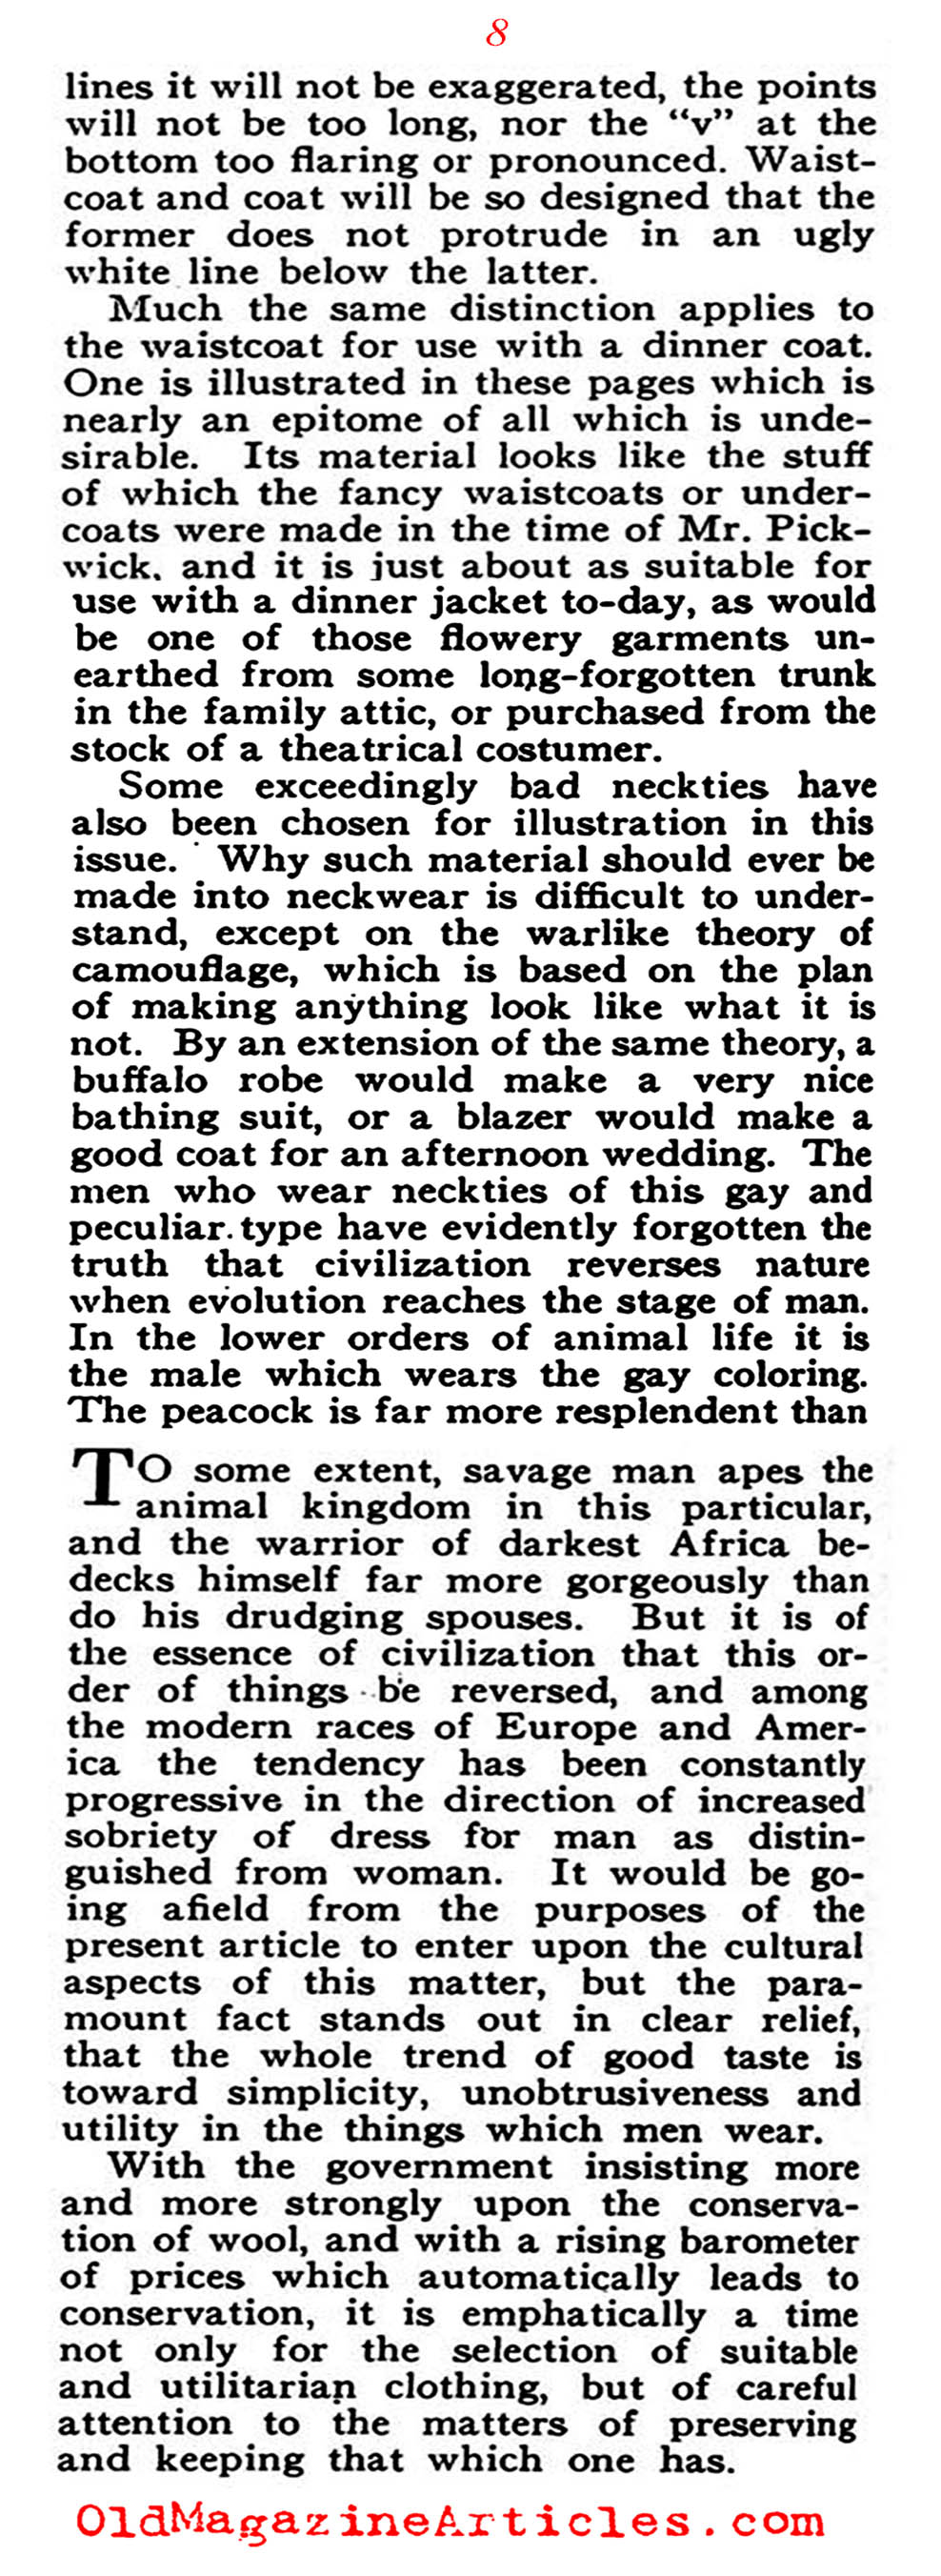 The Well Dressed Man Confronts Bad Taste  (Vanity Fair Magazine, 1918)